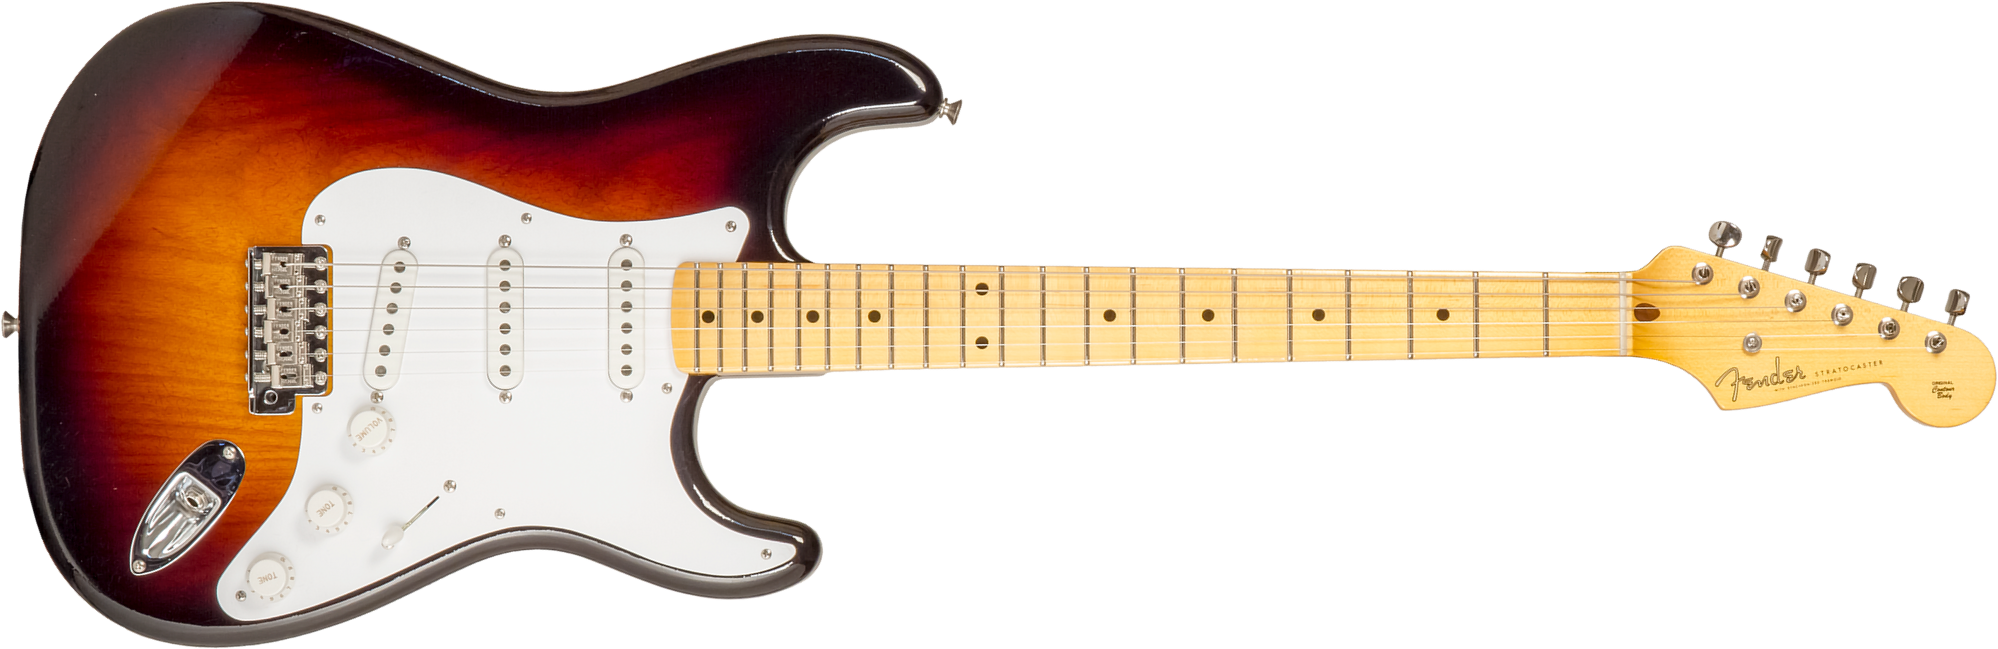 Fender Custom Shop Strat 1954 70th Anniv. 3s Trem Mn #xn4356 - Closet Classic Wide Fade 2-color Sunburst - Elektrische gitaar in Str-vorm - Main pictu